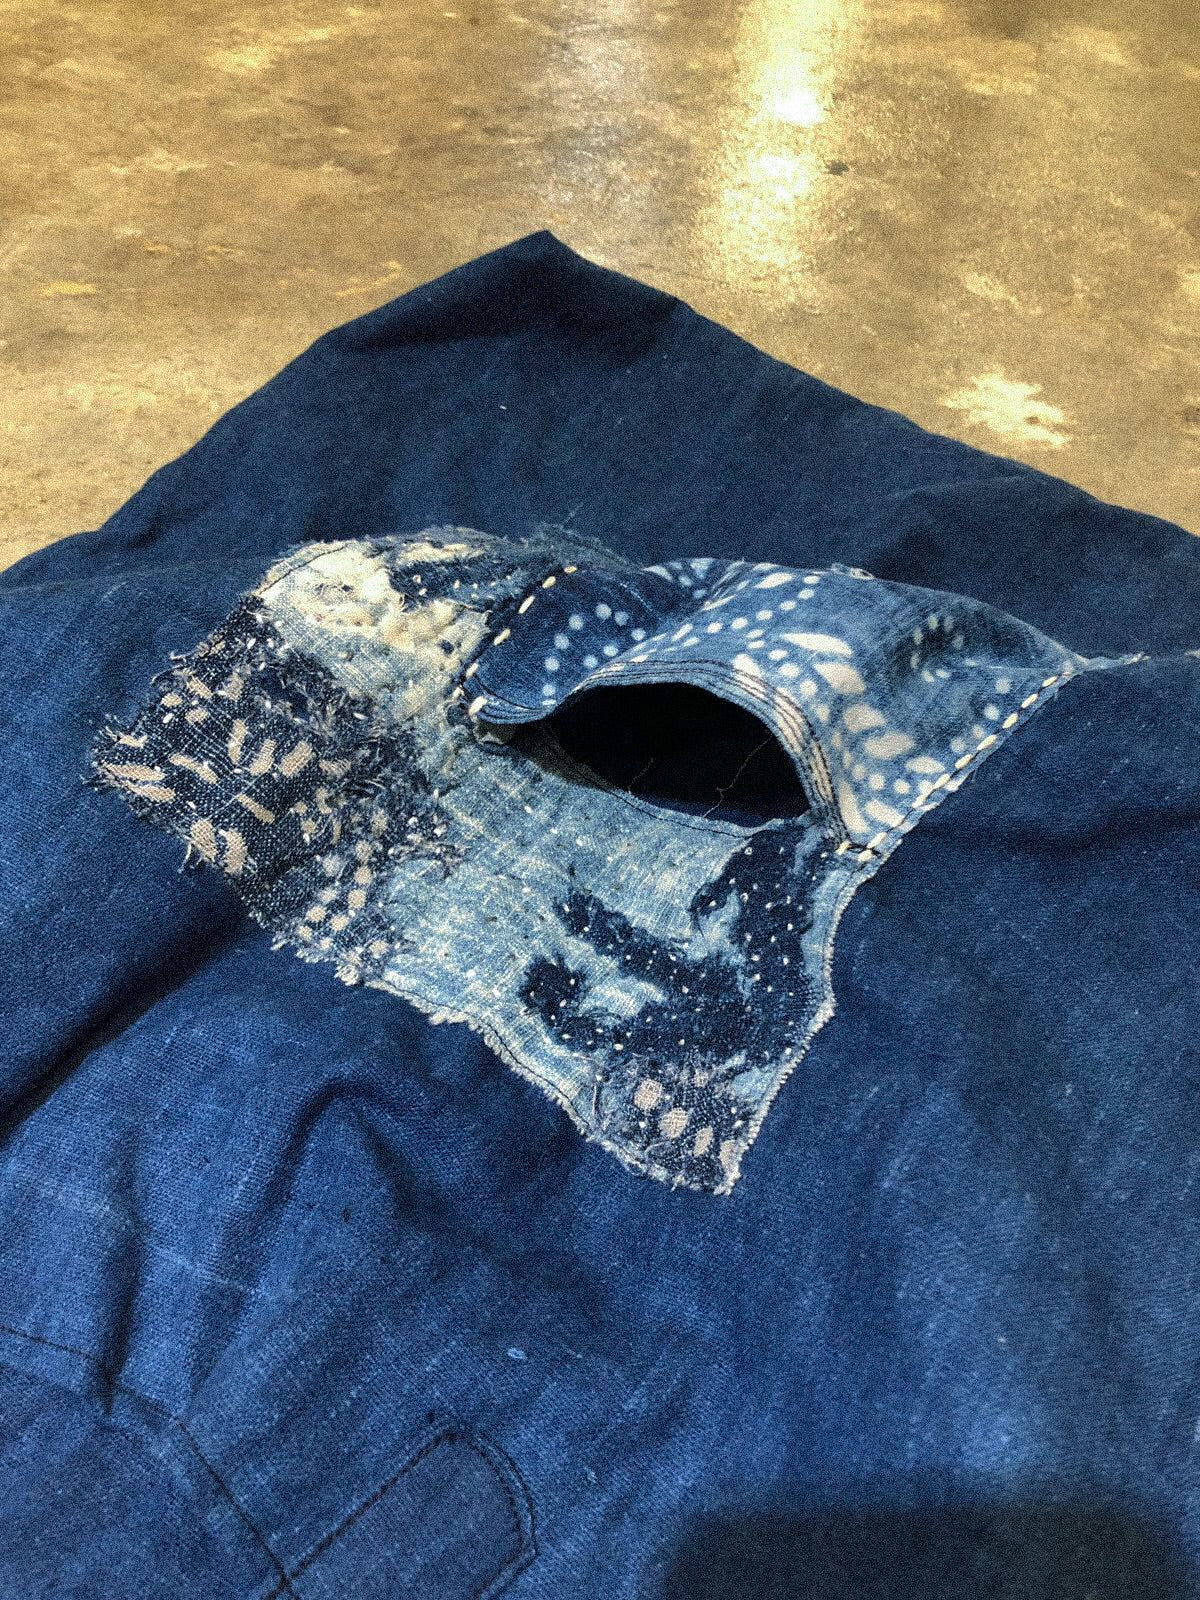 Aomori-ken Boro Indigo Tote Bag Aomori ragged blue dyed tote bag